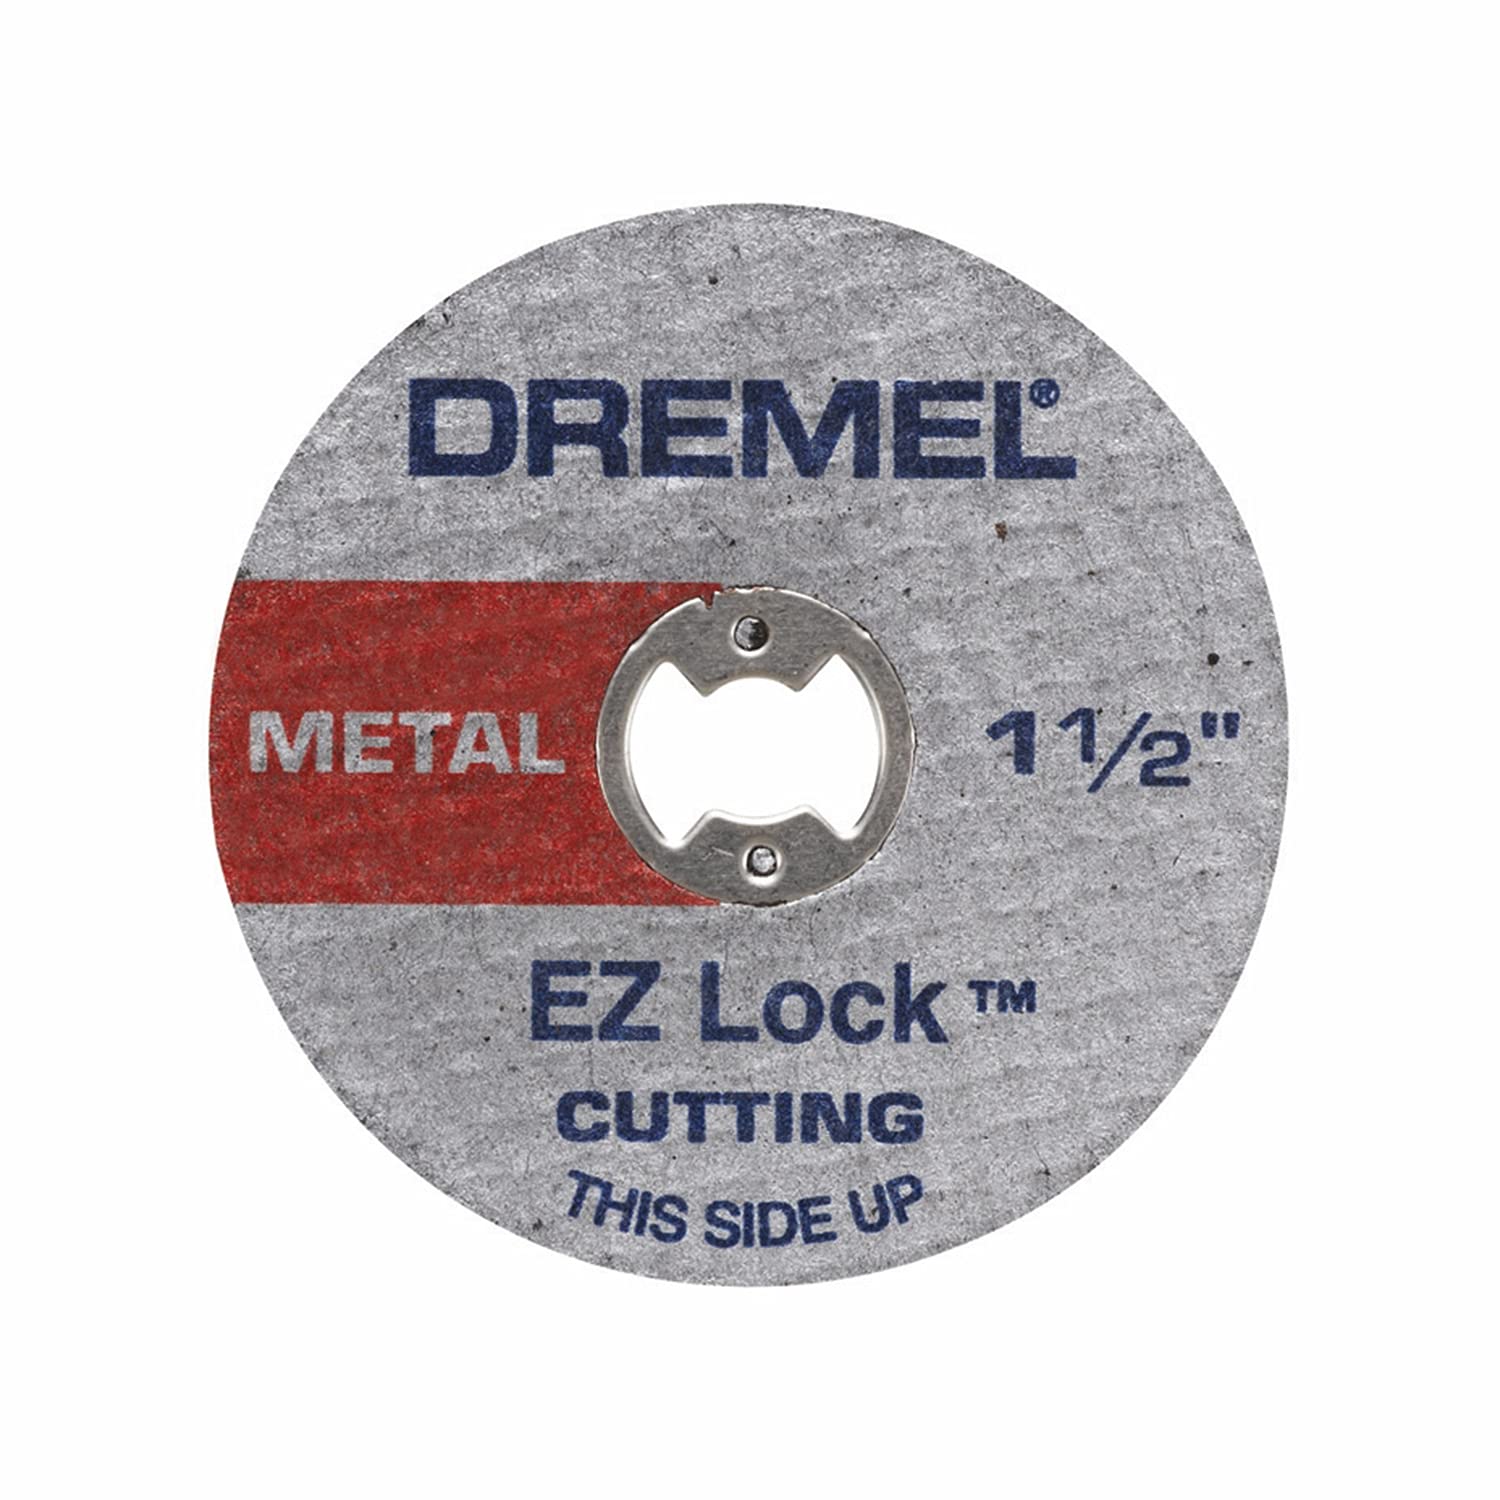 Dremel EZ Lock 1-1/2 in. Rotary Tool Metal Cut-Off Wheels for Metal